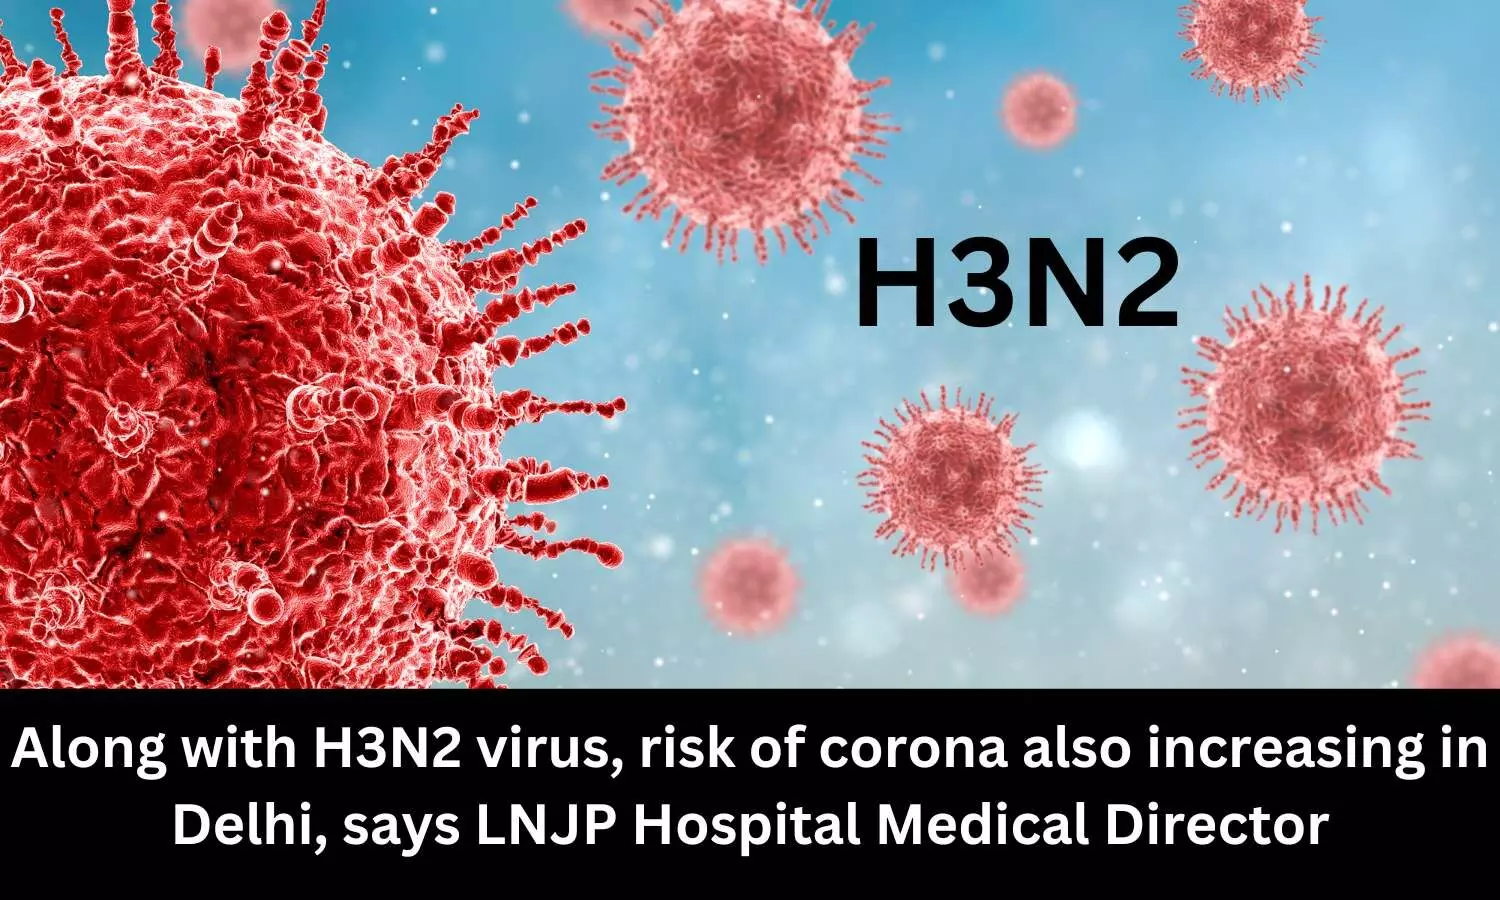 Along with H3N2 virus, risk of corona also increasing in Delhi: LNJP Hospital Medical Director